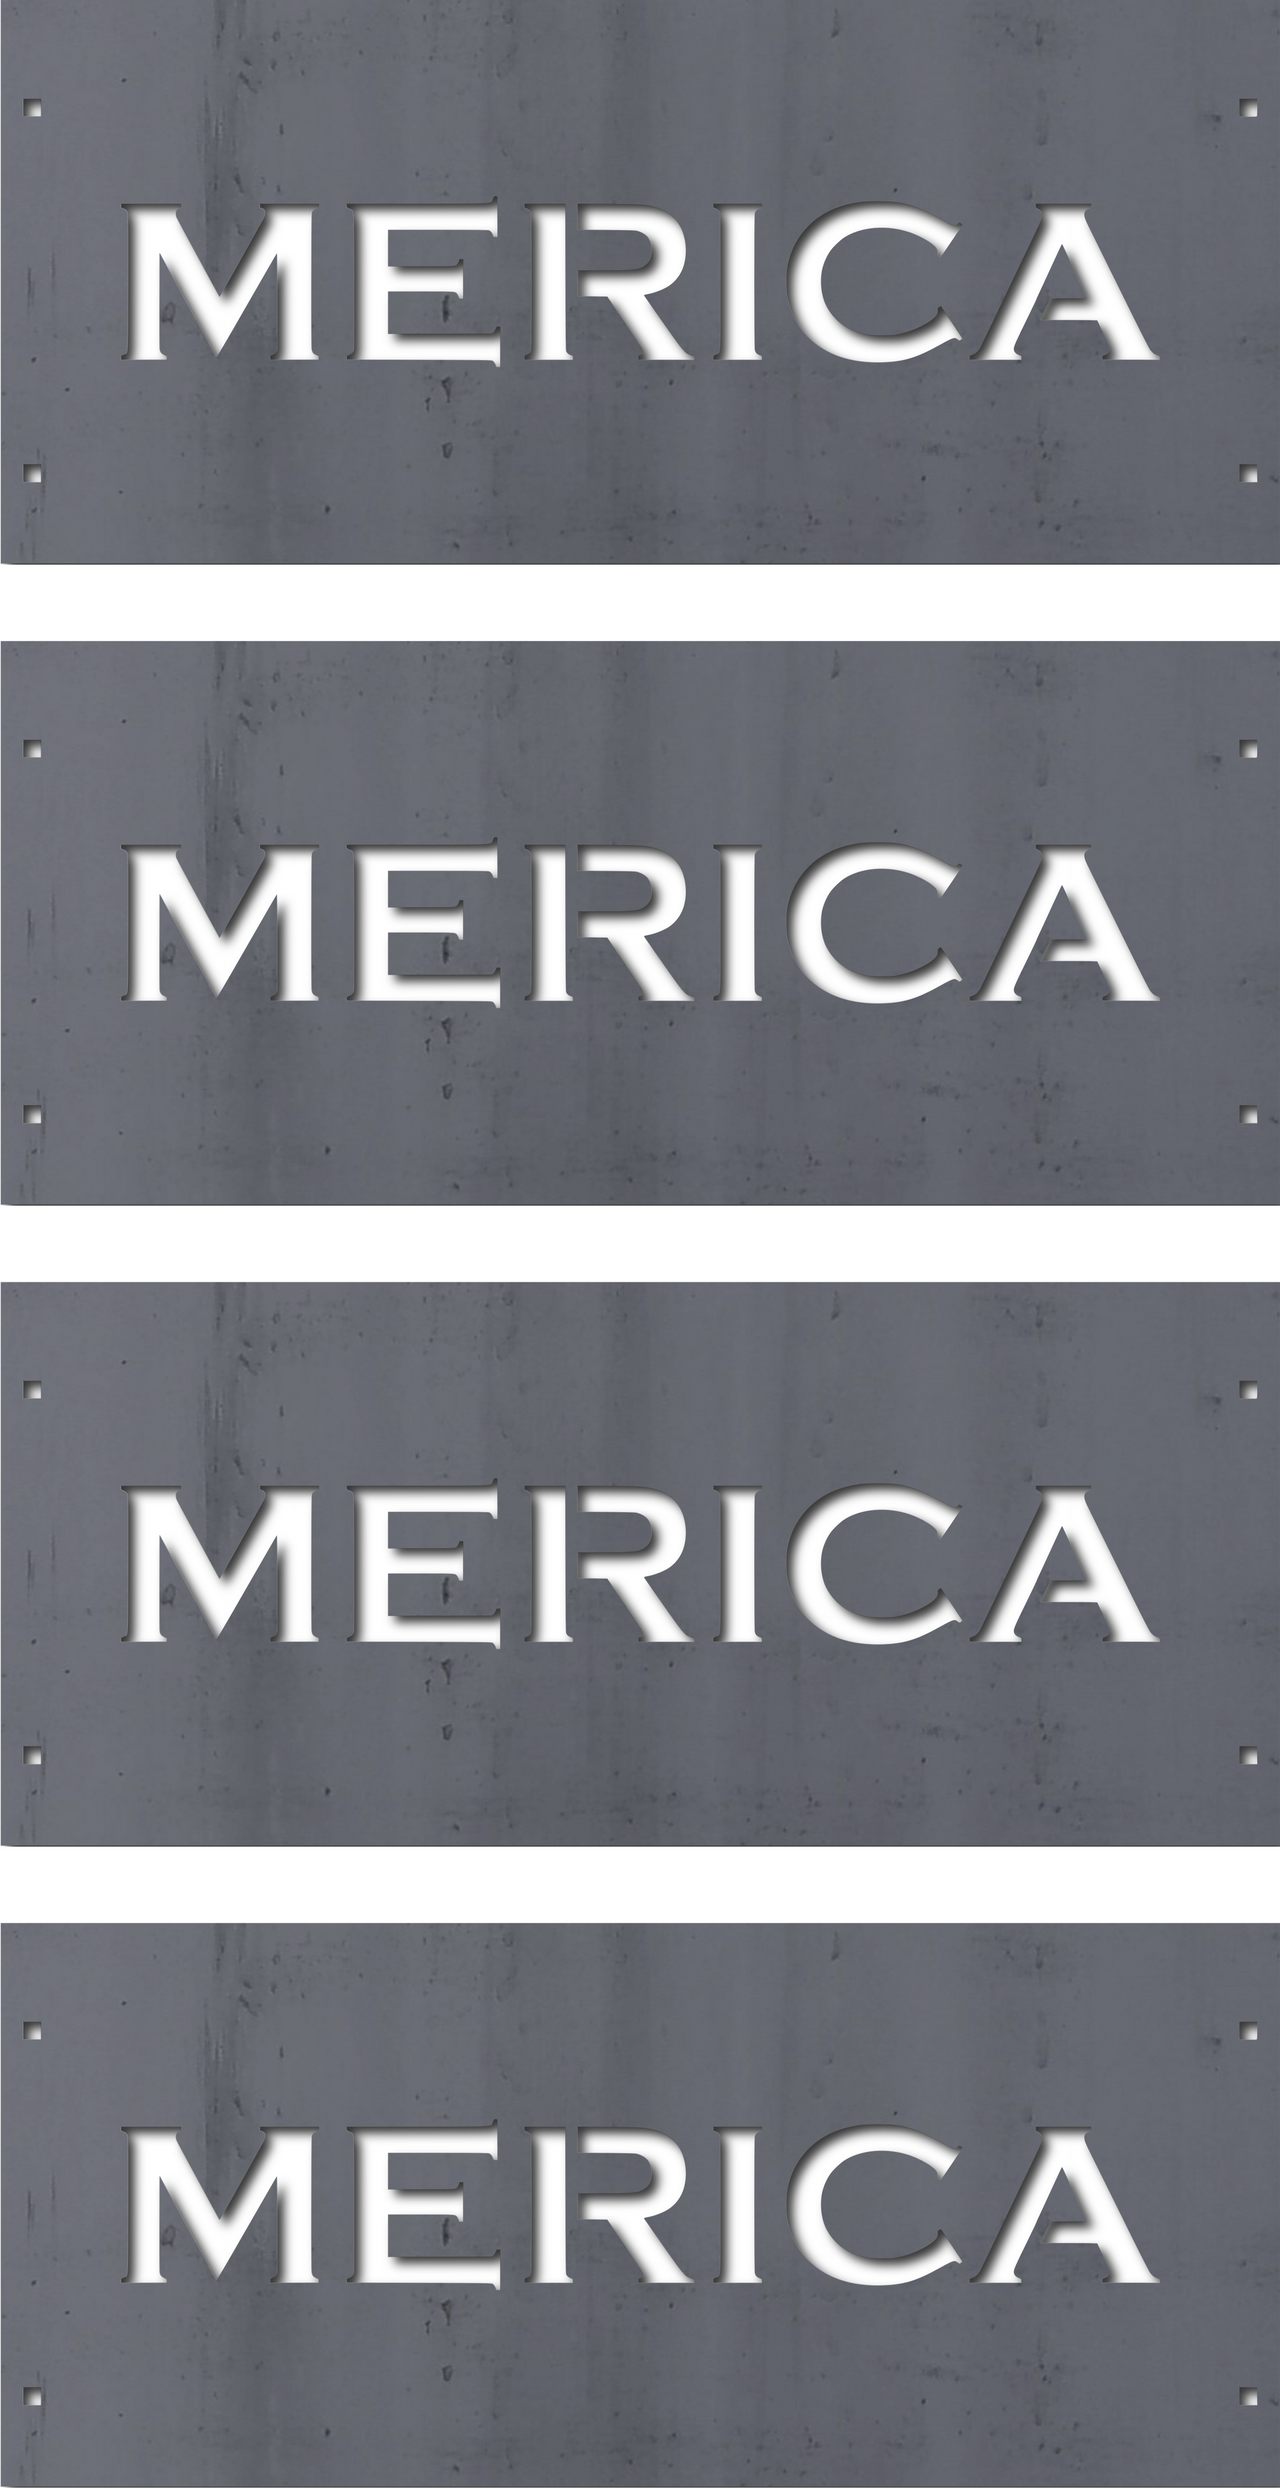 Merica Steel Fire Pit - Metal Outdoor Backyard Fire Ring - Patriotic America Patio Decor